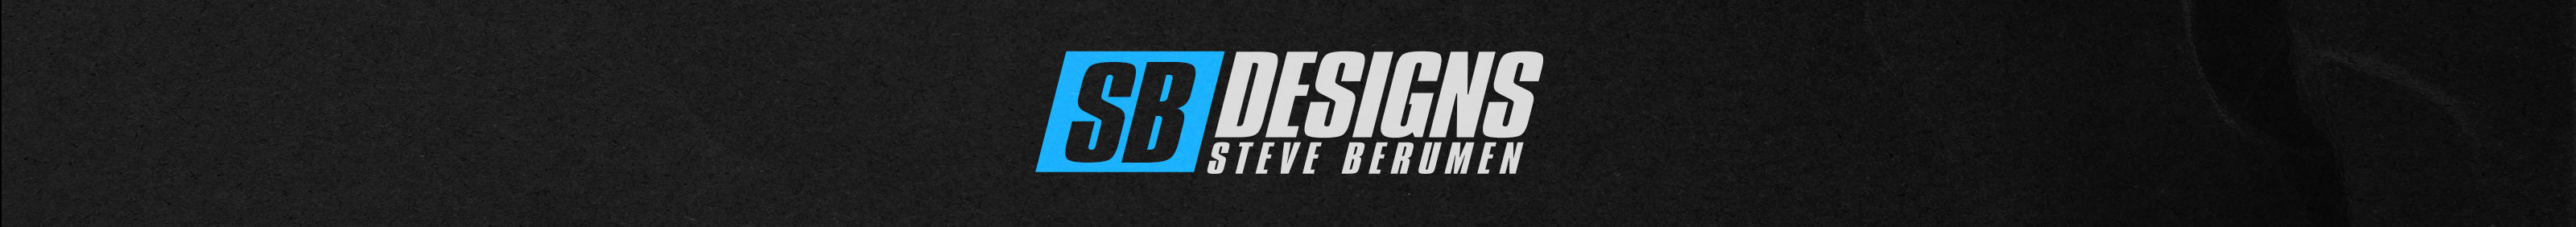 Banner de perfil de Steve Berumen